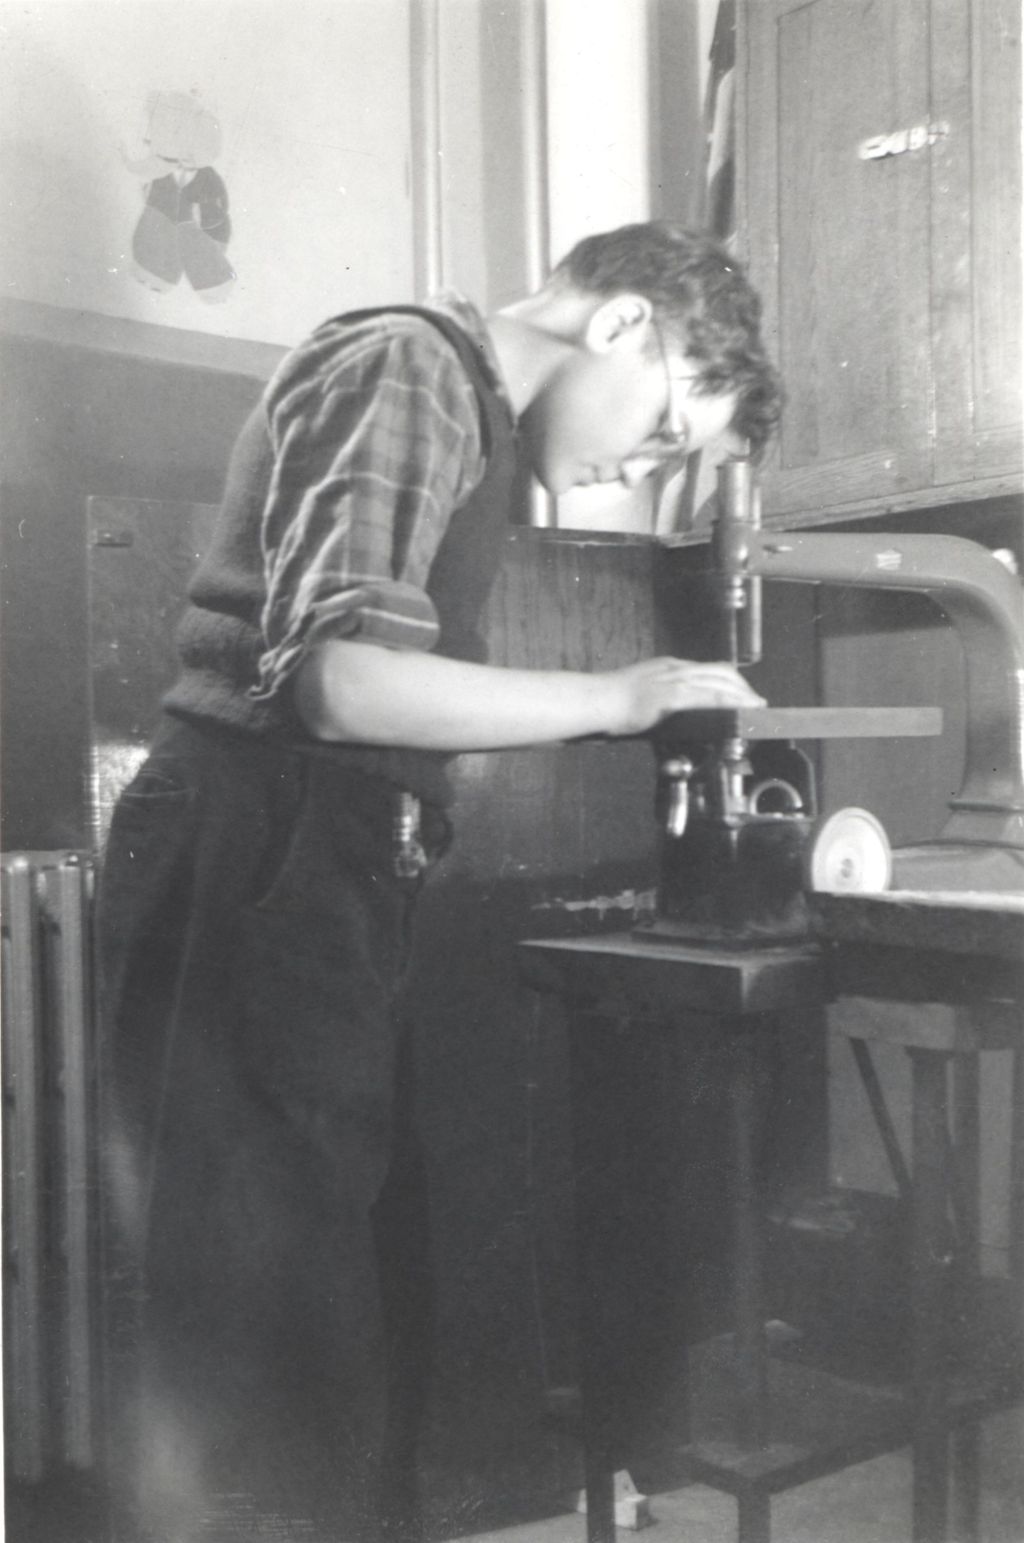 Teenage boy working on drill press in workroom